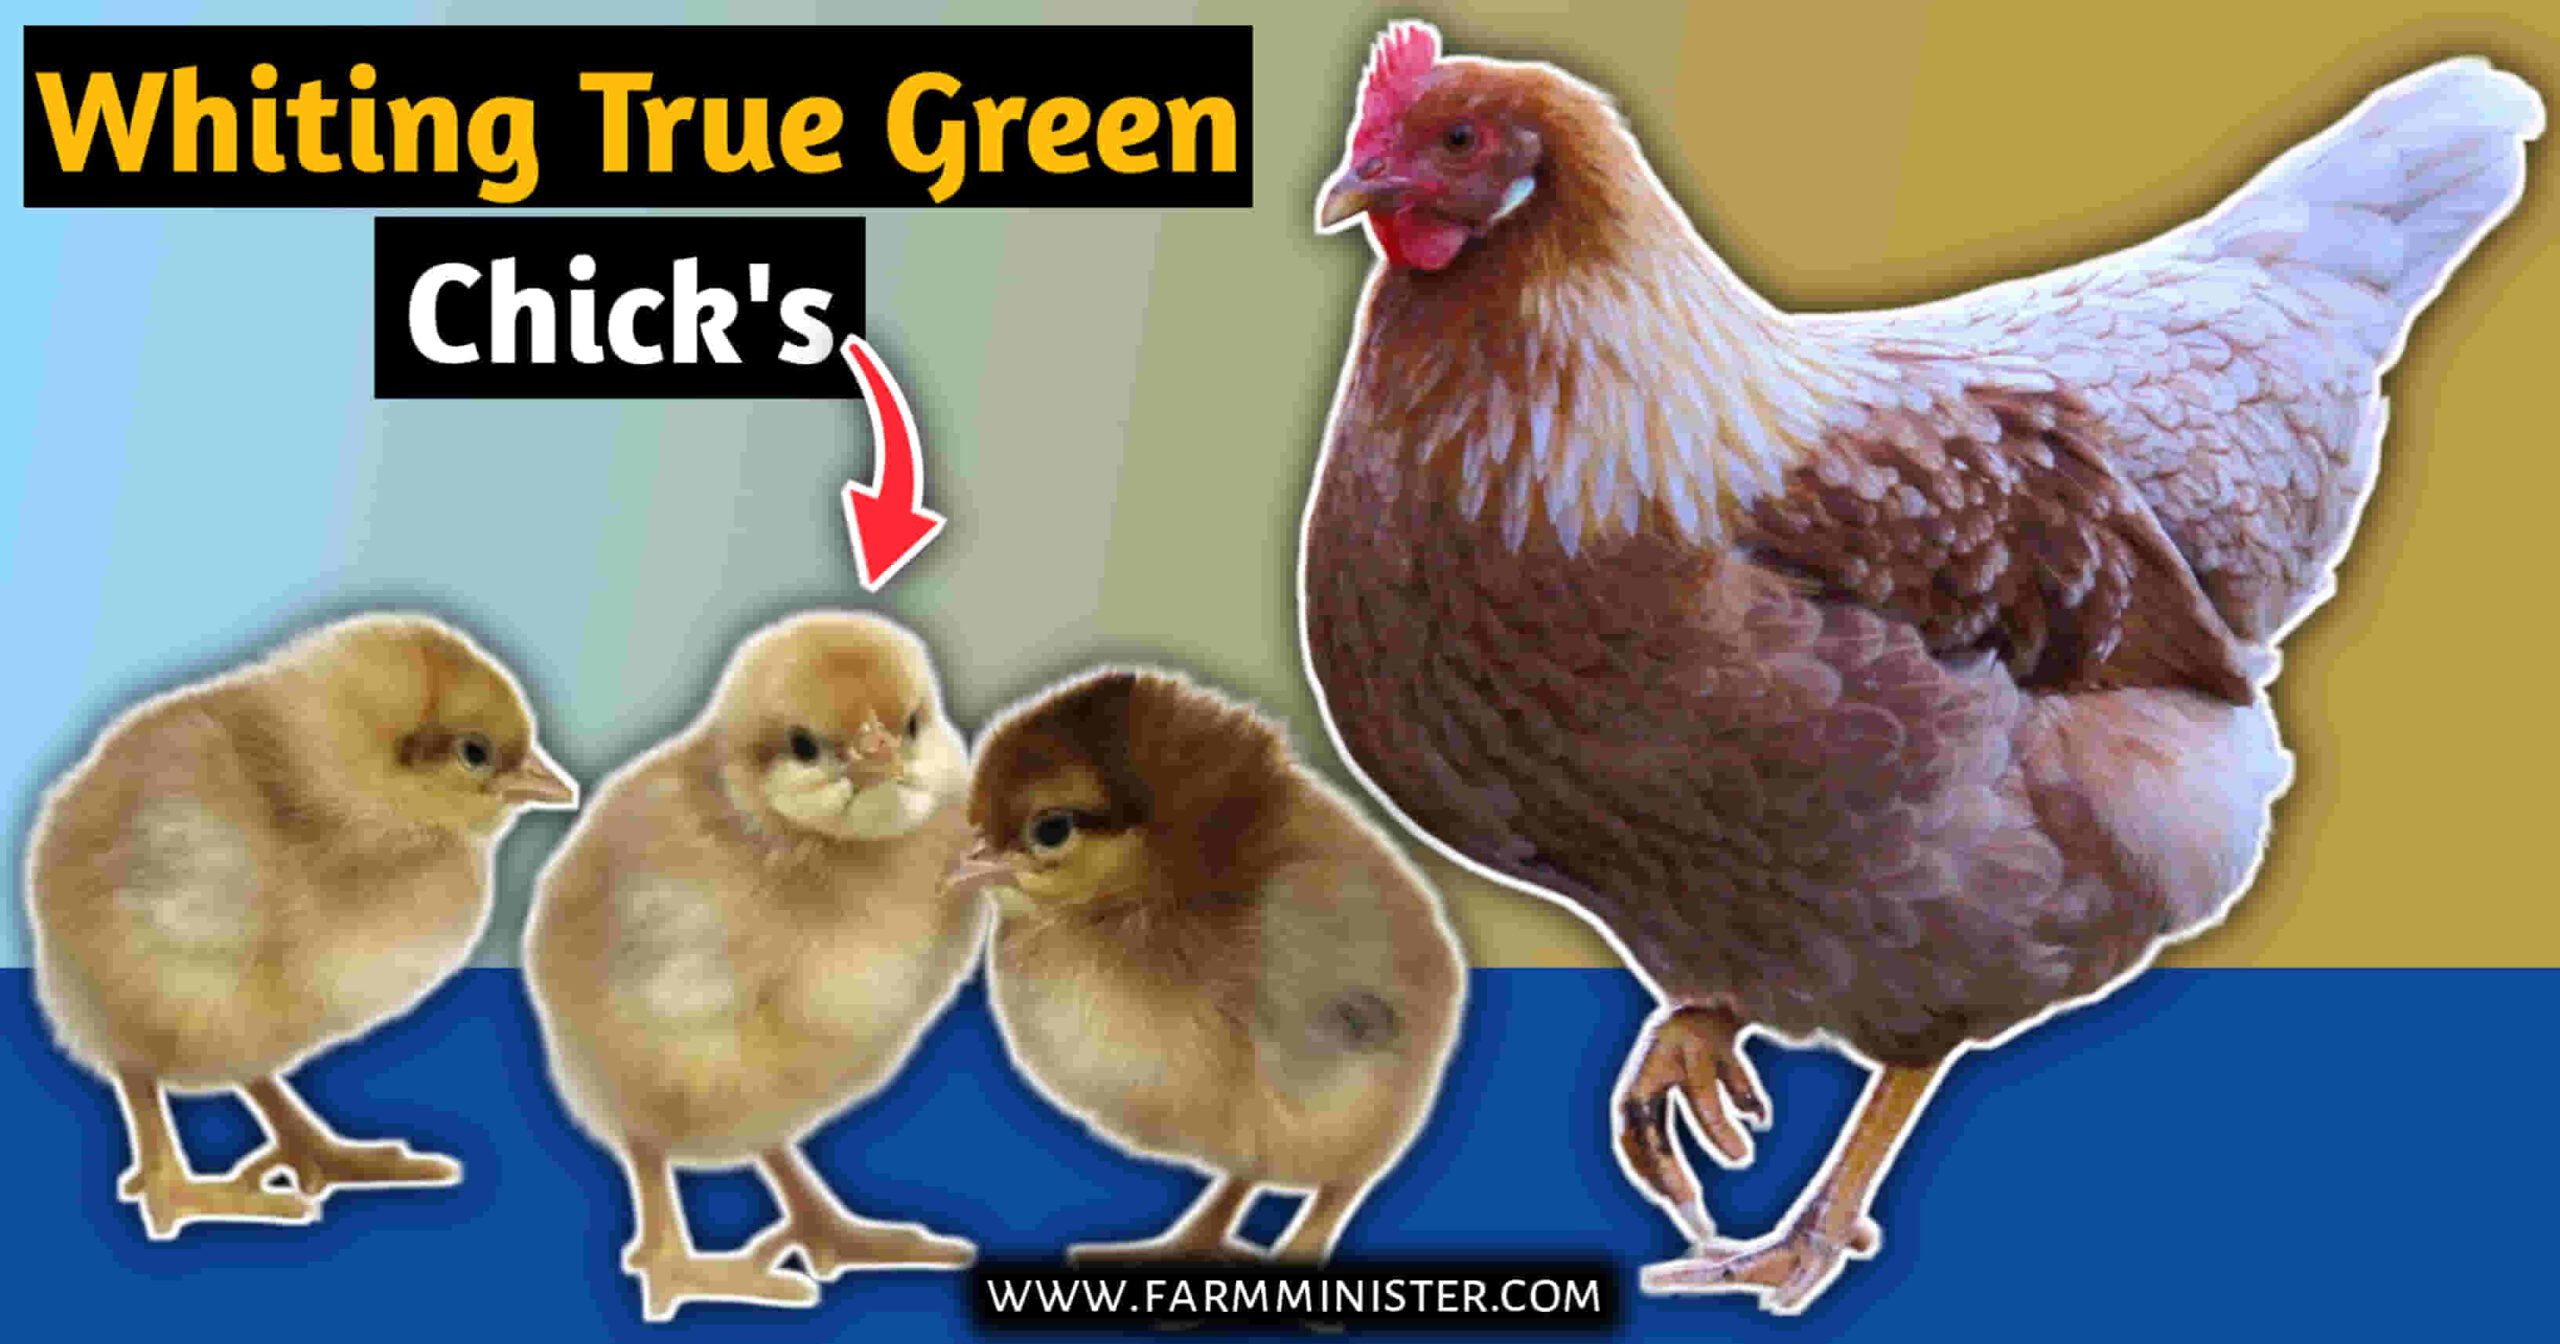 Whiting True Green chicks